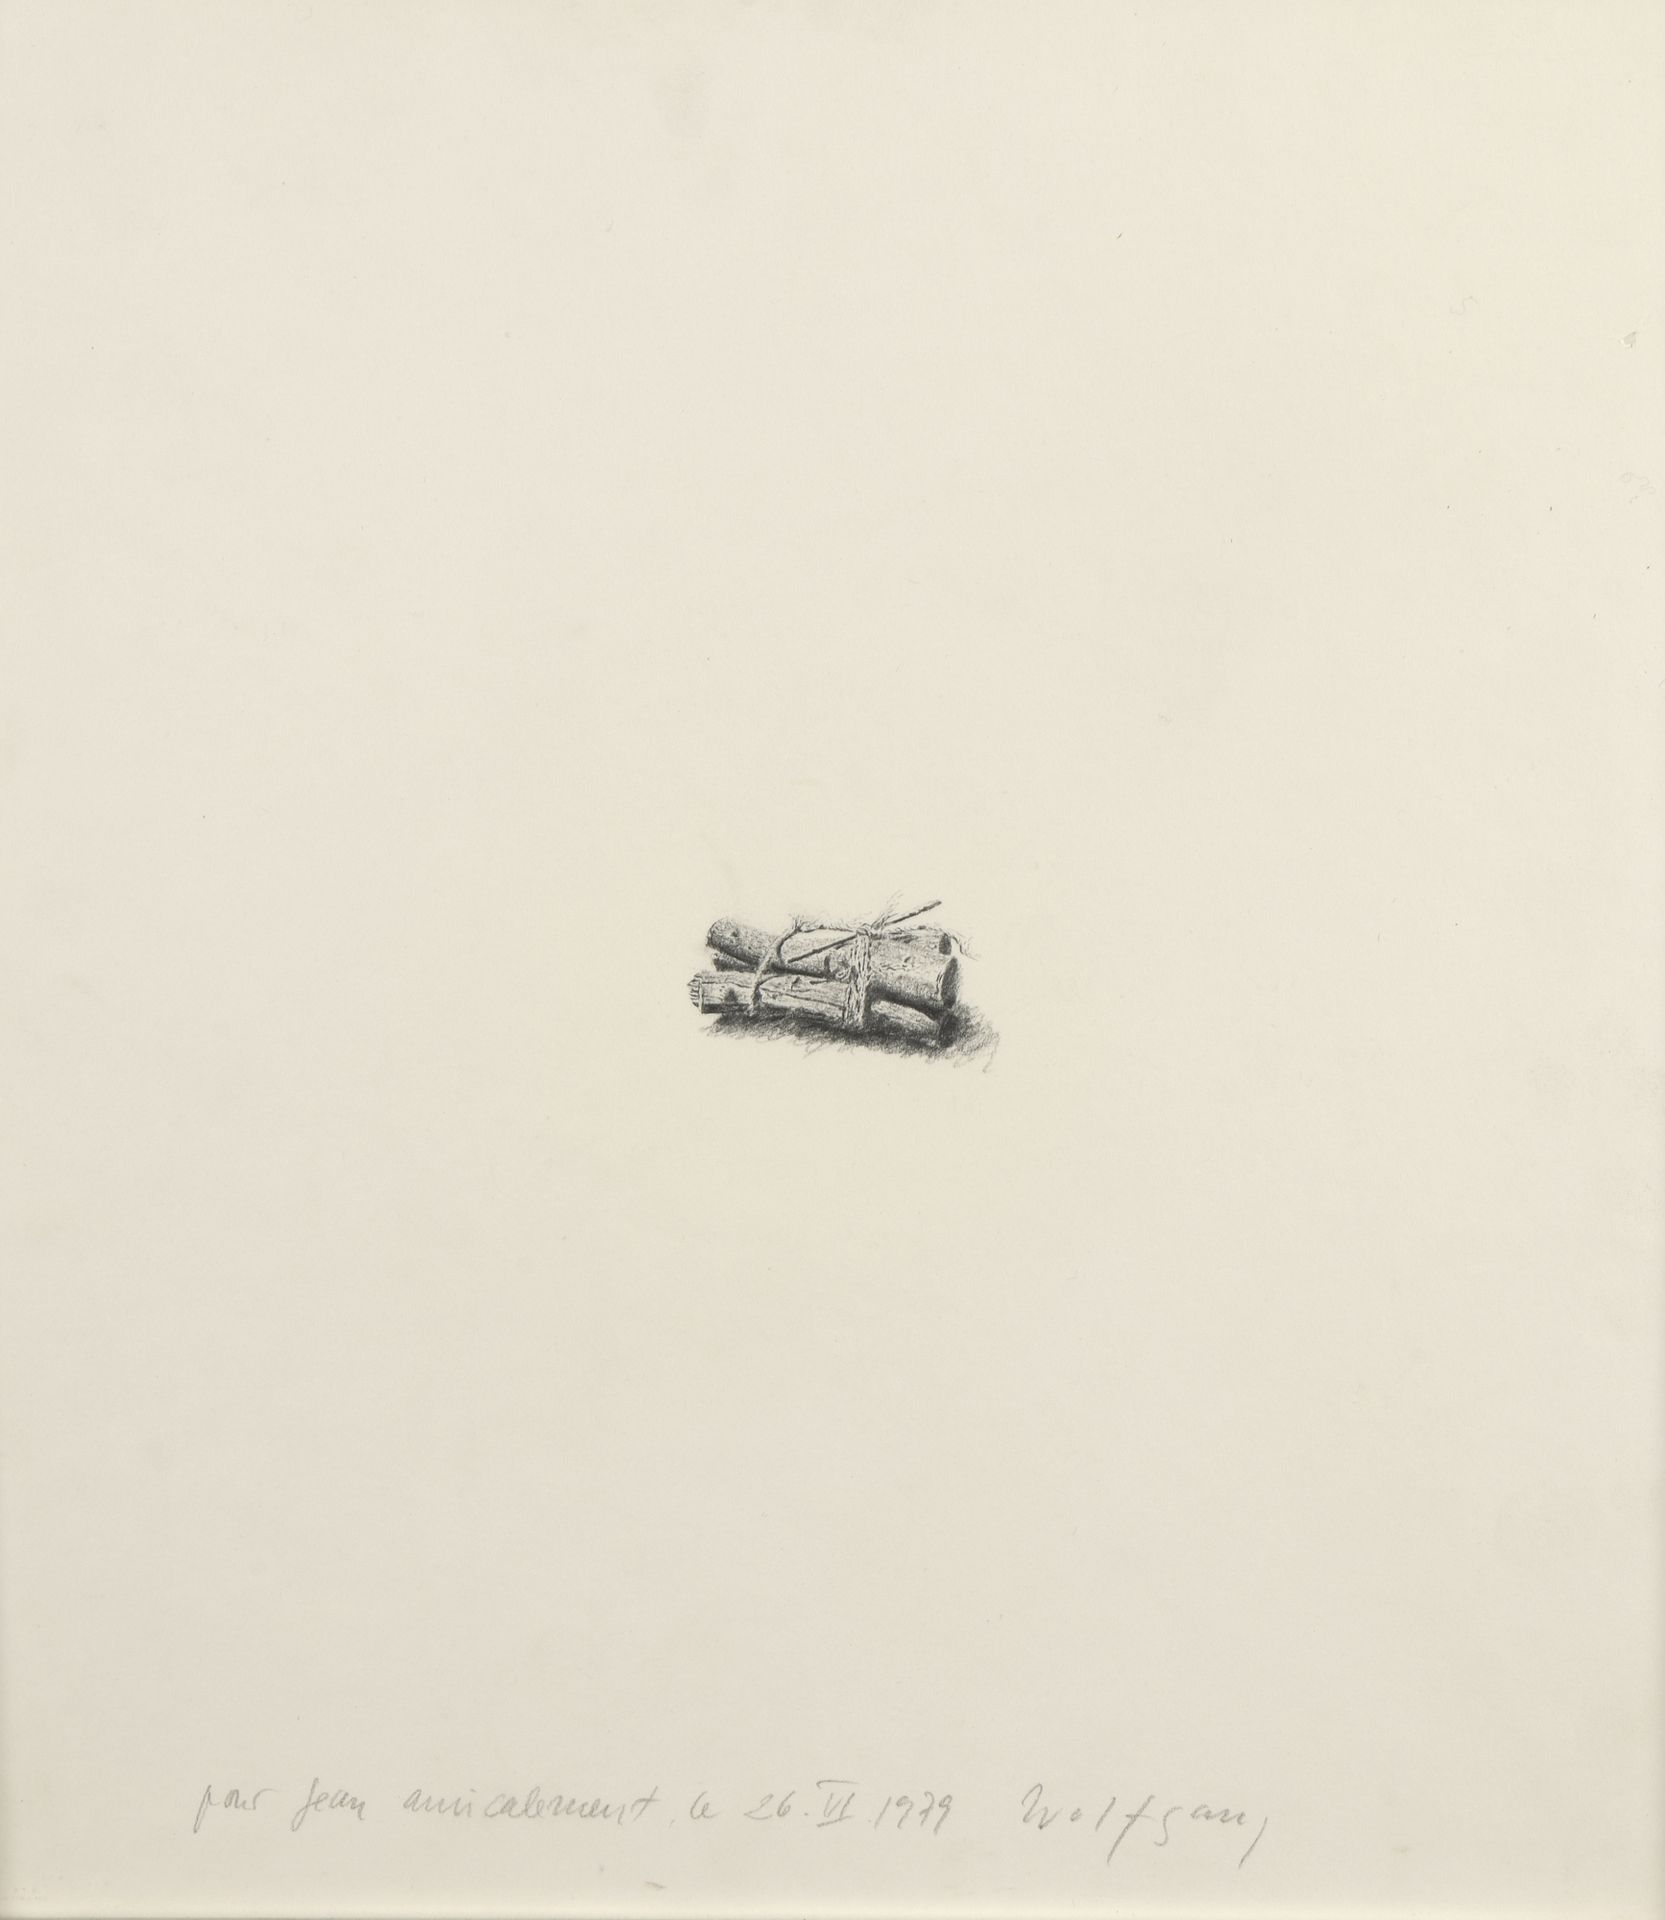 Null 沃尔夫冈-加夫根（生于1936年

无题》，1979年

纸上铅笔画，有签名，日期为1979年6月26日，并在底部注明。

35 x 31 cm